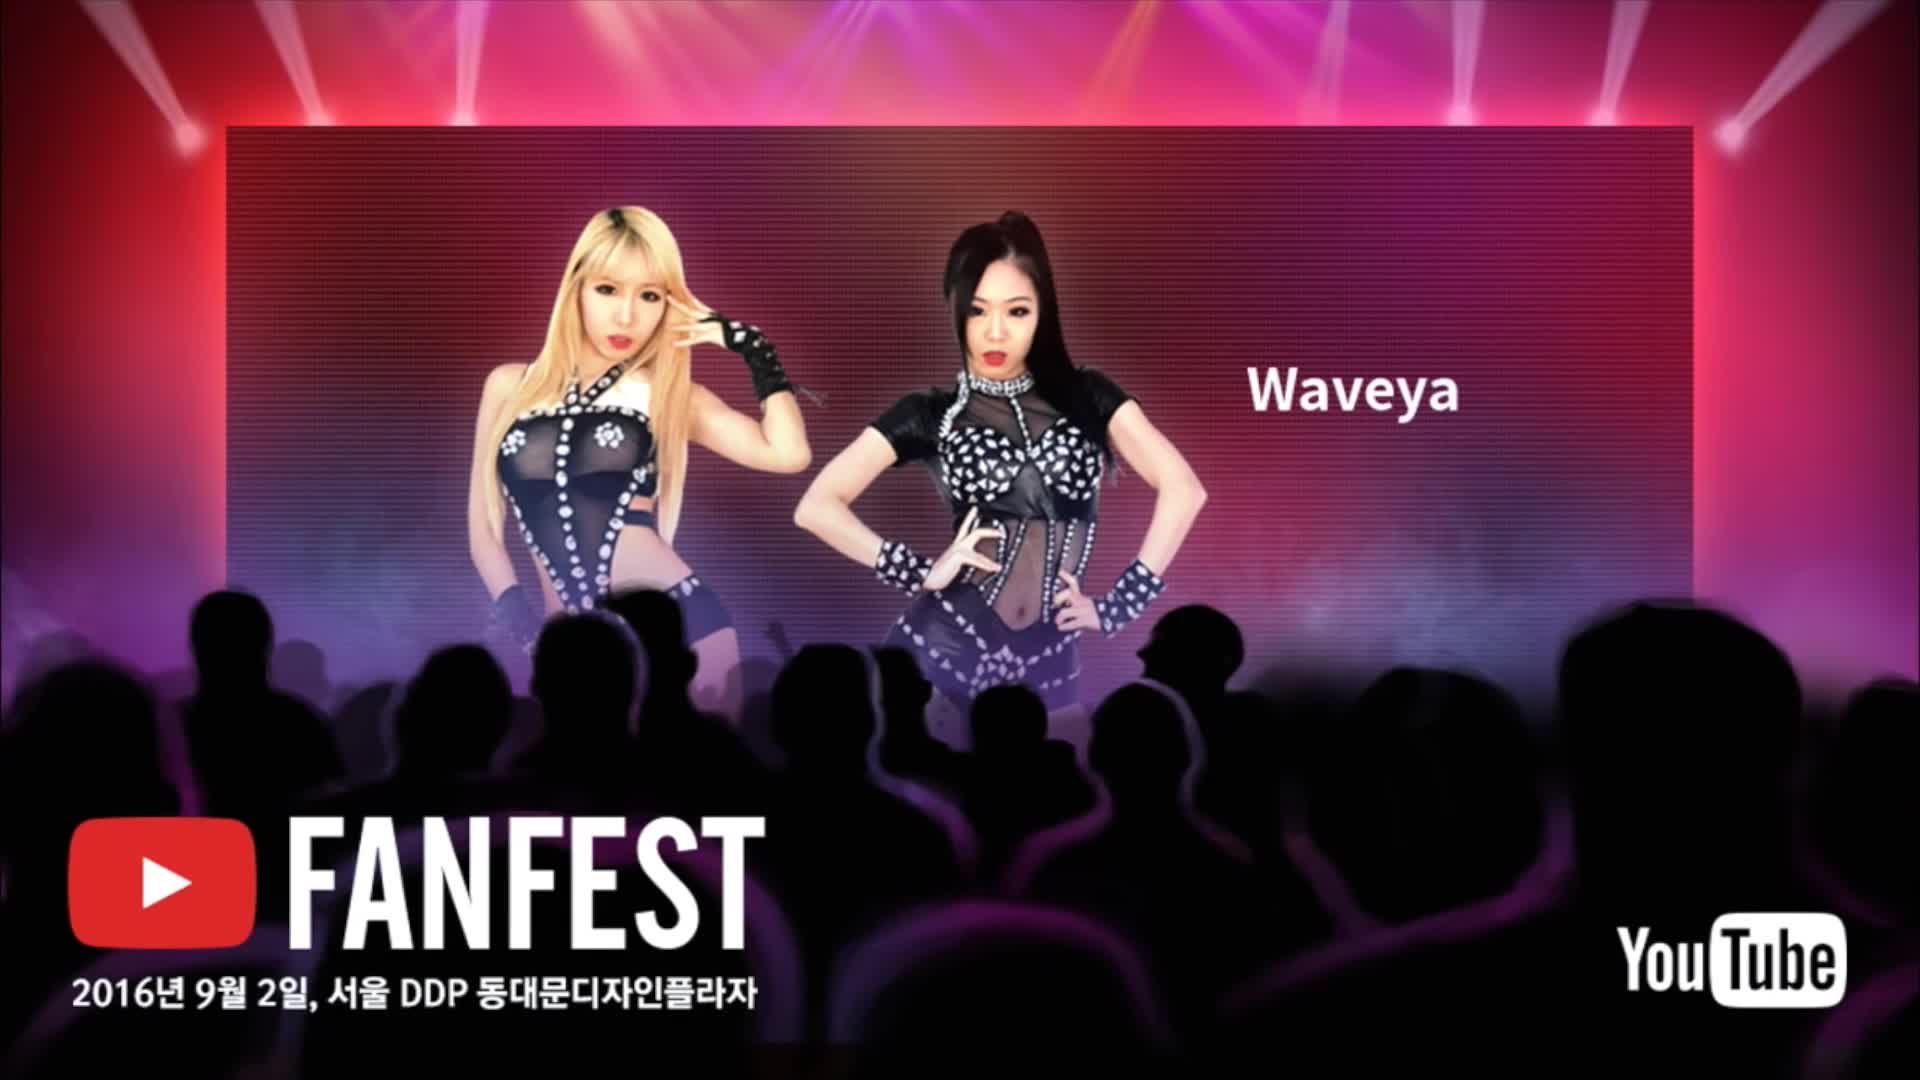 Youtube Fanfest Korea 2016 유튜브 팬페스트 코리아 WAVEYA